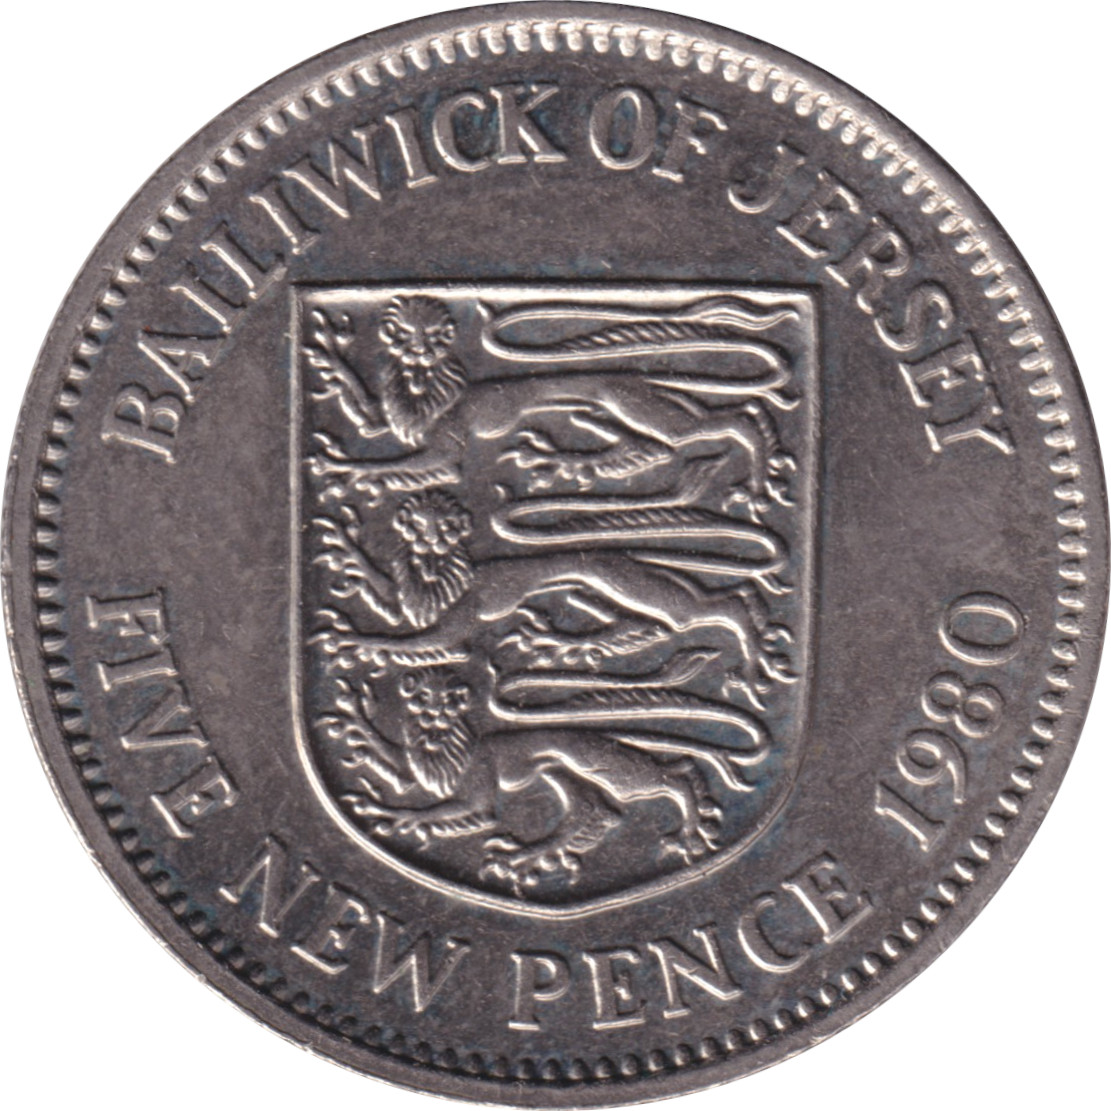 5 pence - Elizabeth II - Buste jeune - New Pence